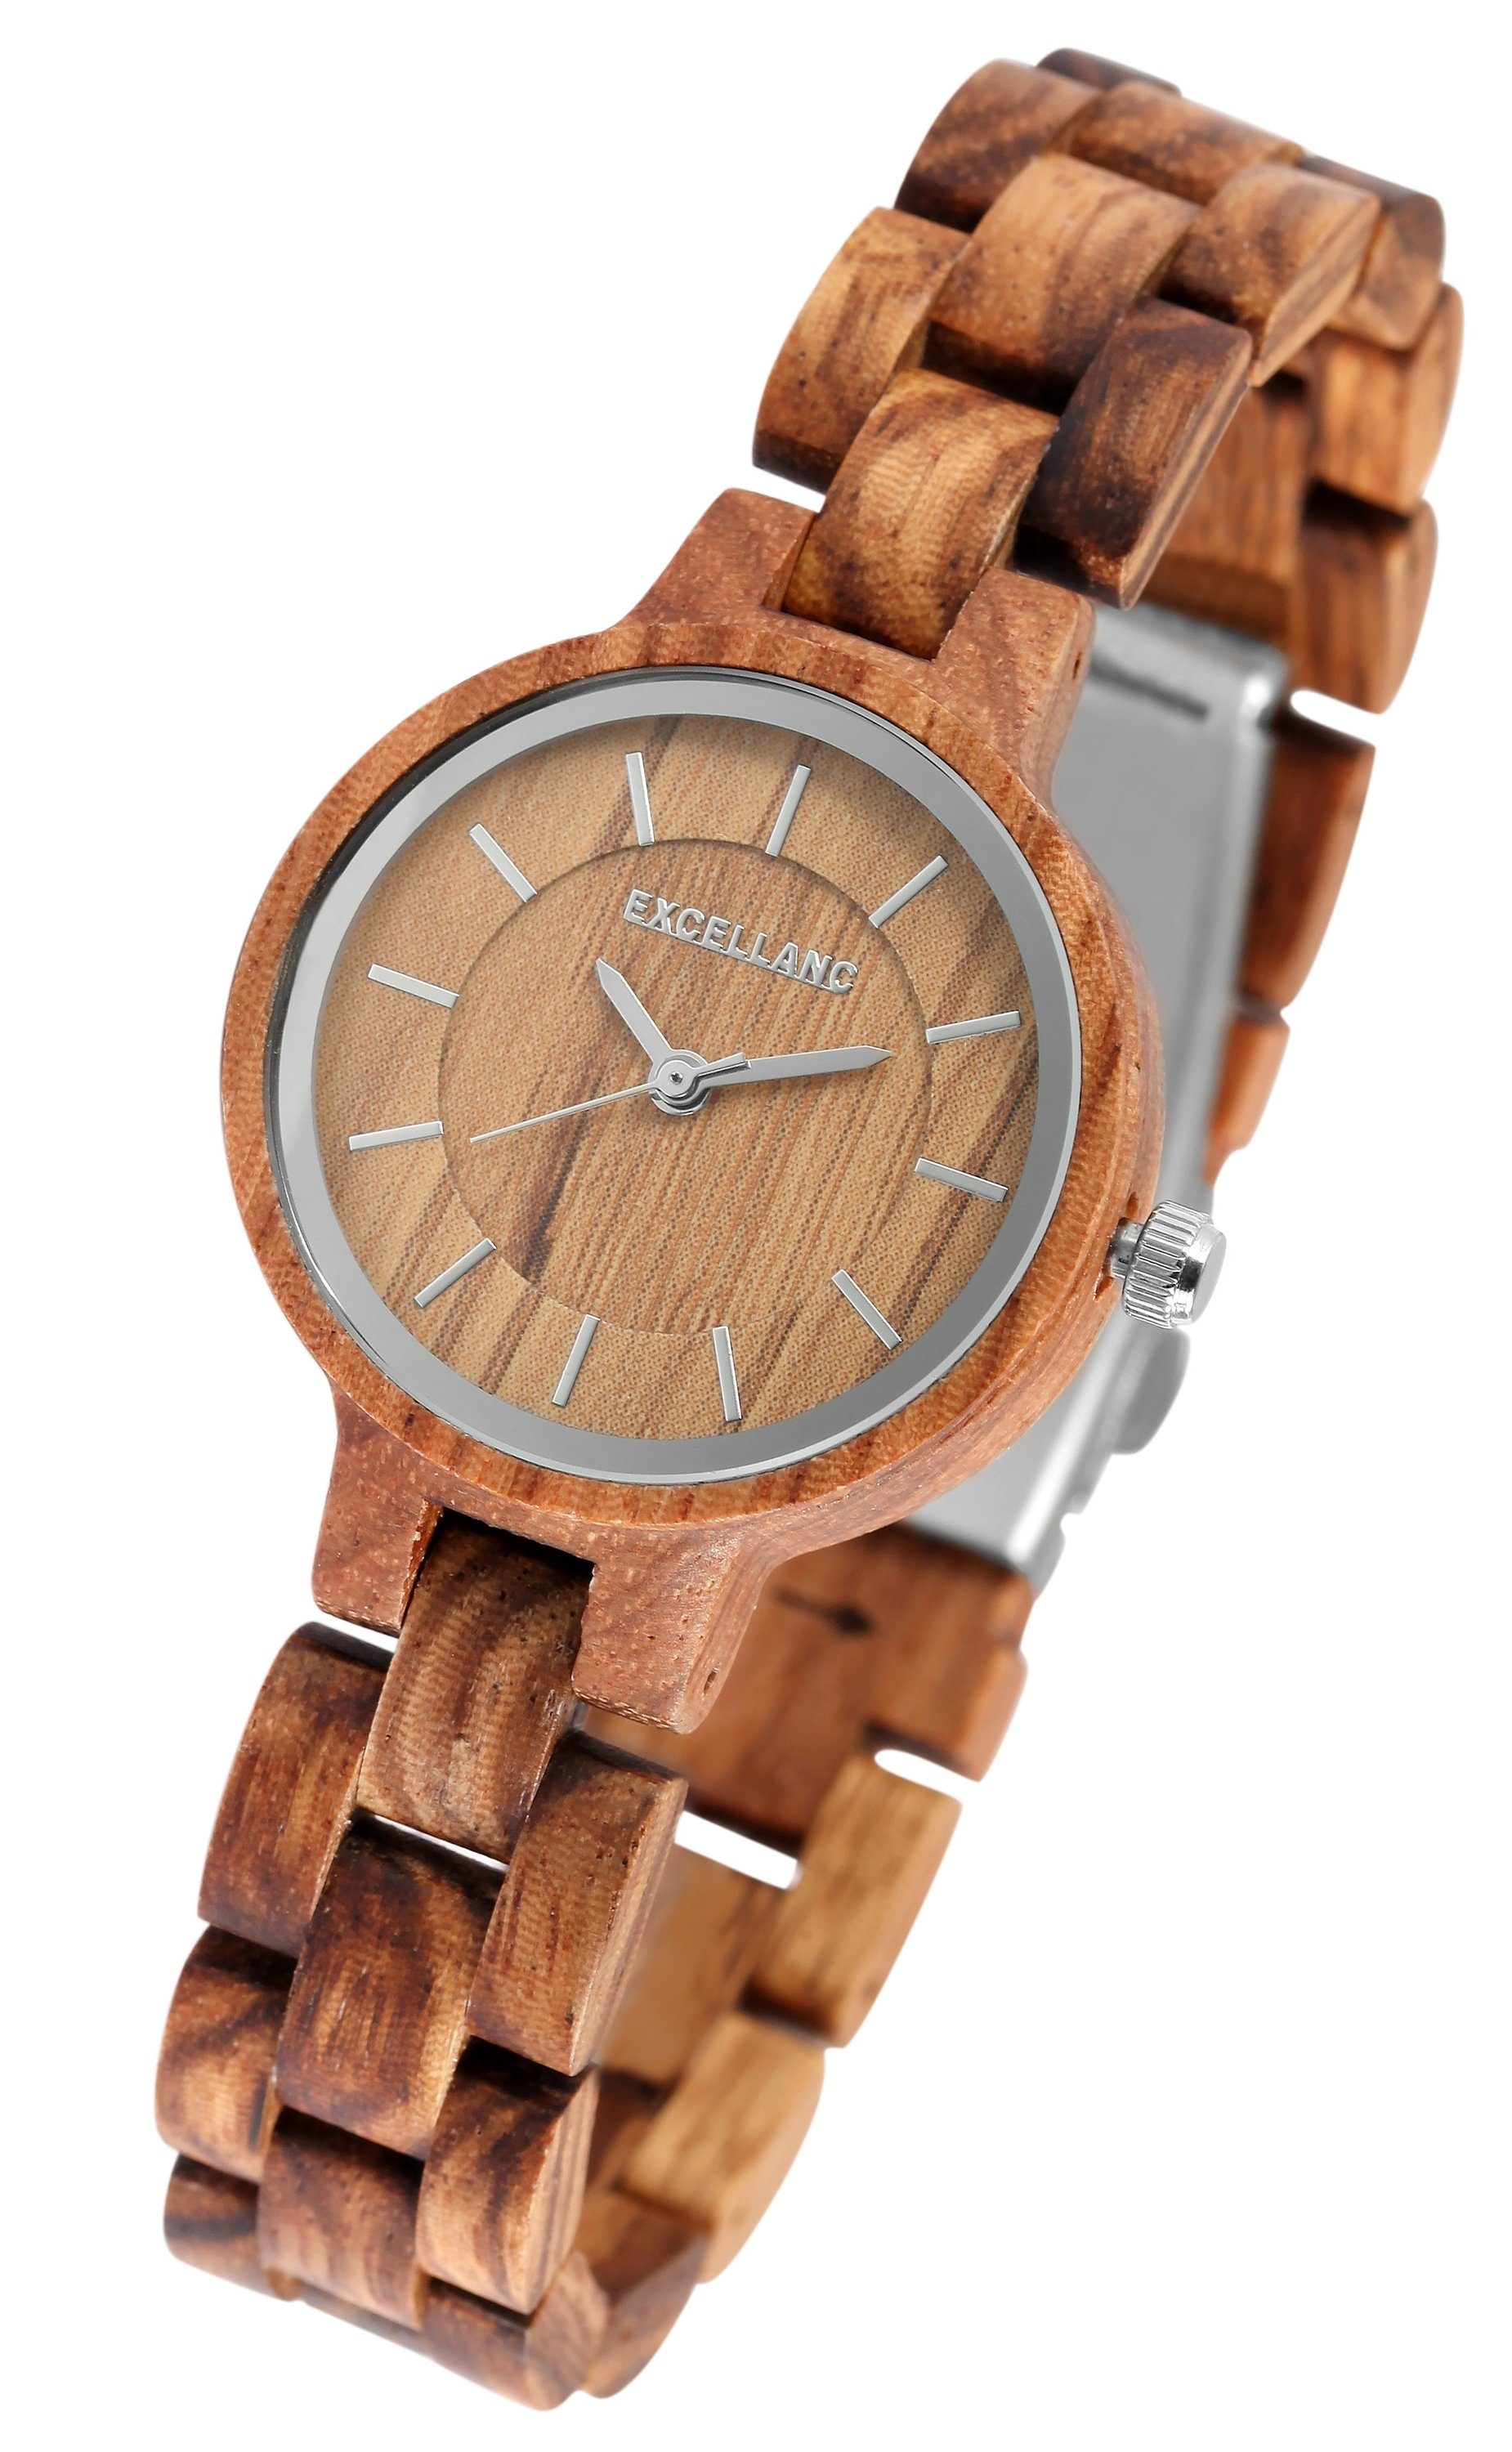 Armbanduuhr Holz Damen Holzarmbanduhr, Holzarmbanduhr Quarzuhr aus Adelia´s Excellanc / Armbanduhr